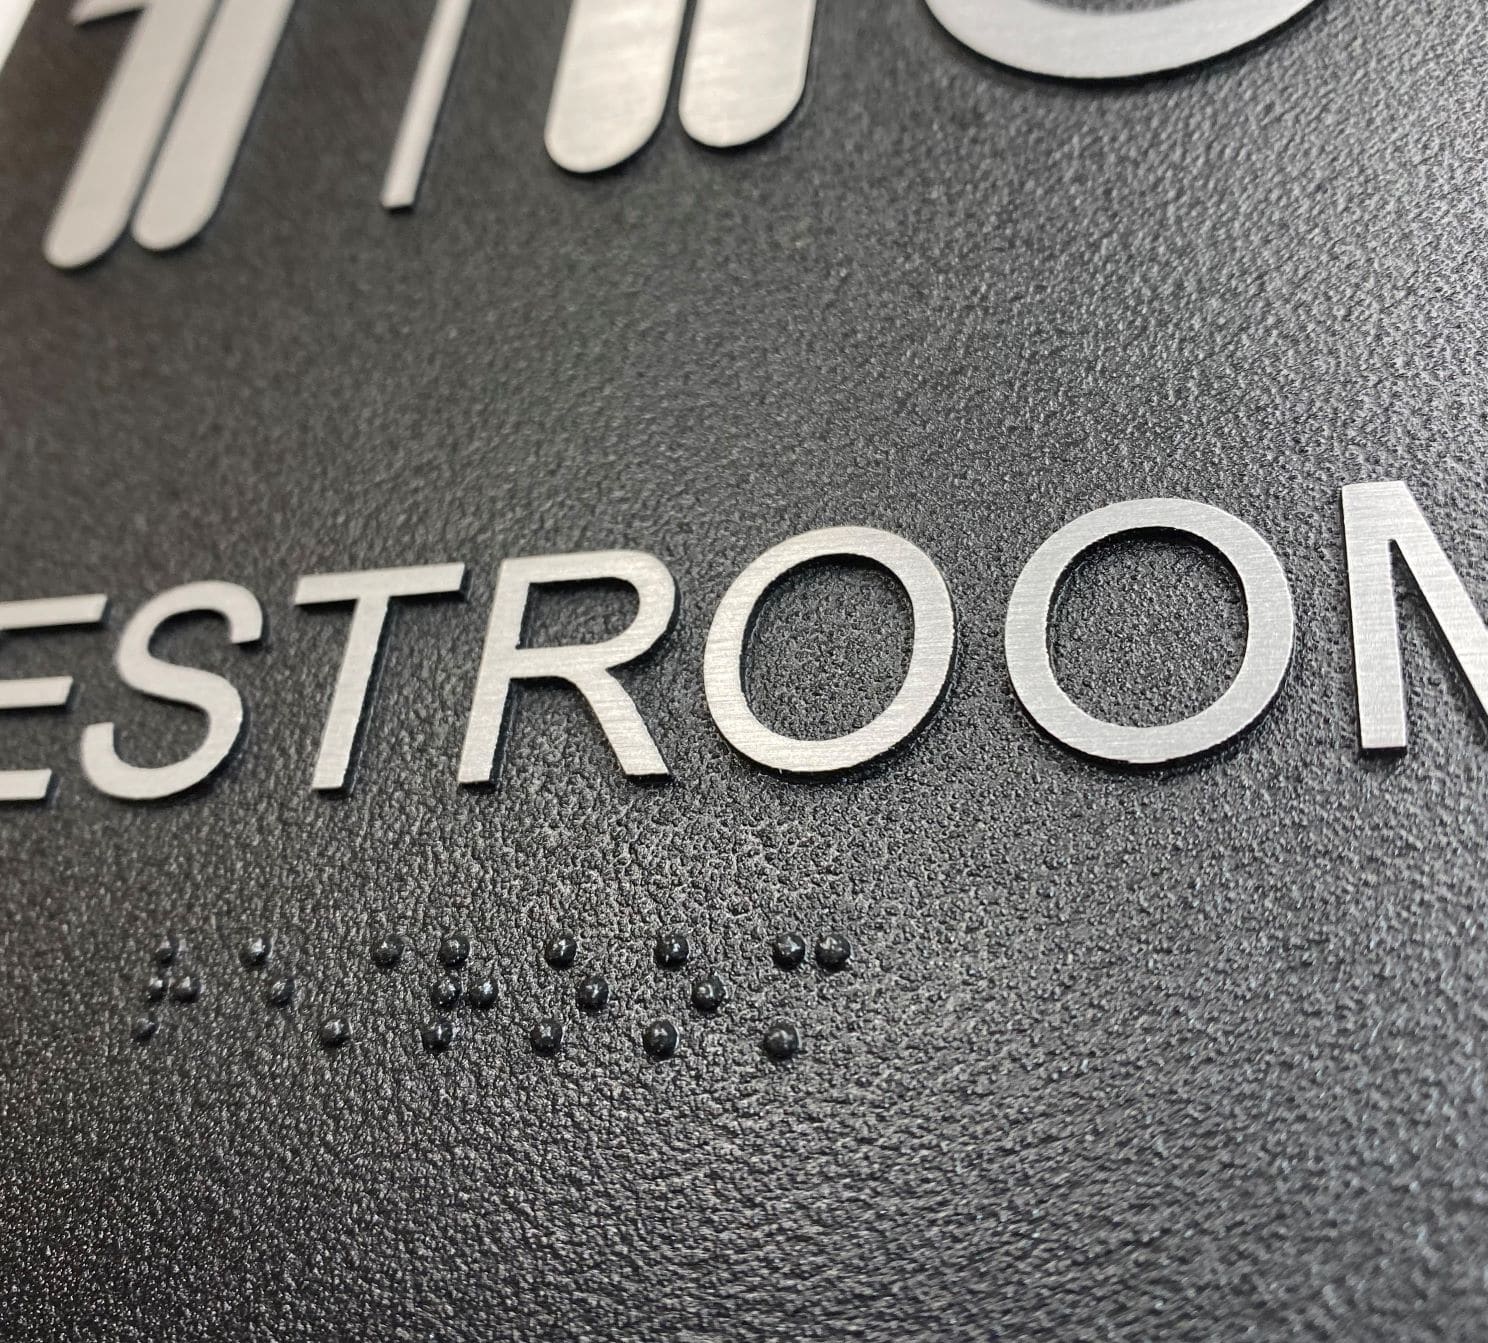 braille close up of exterior ADA all gender restroom sign